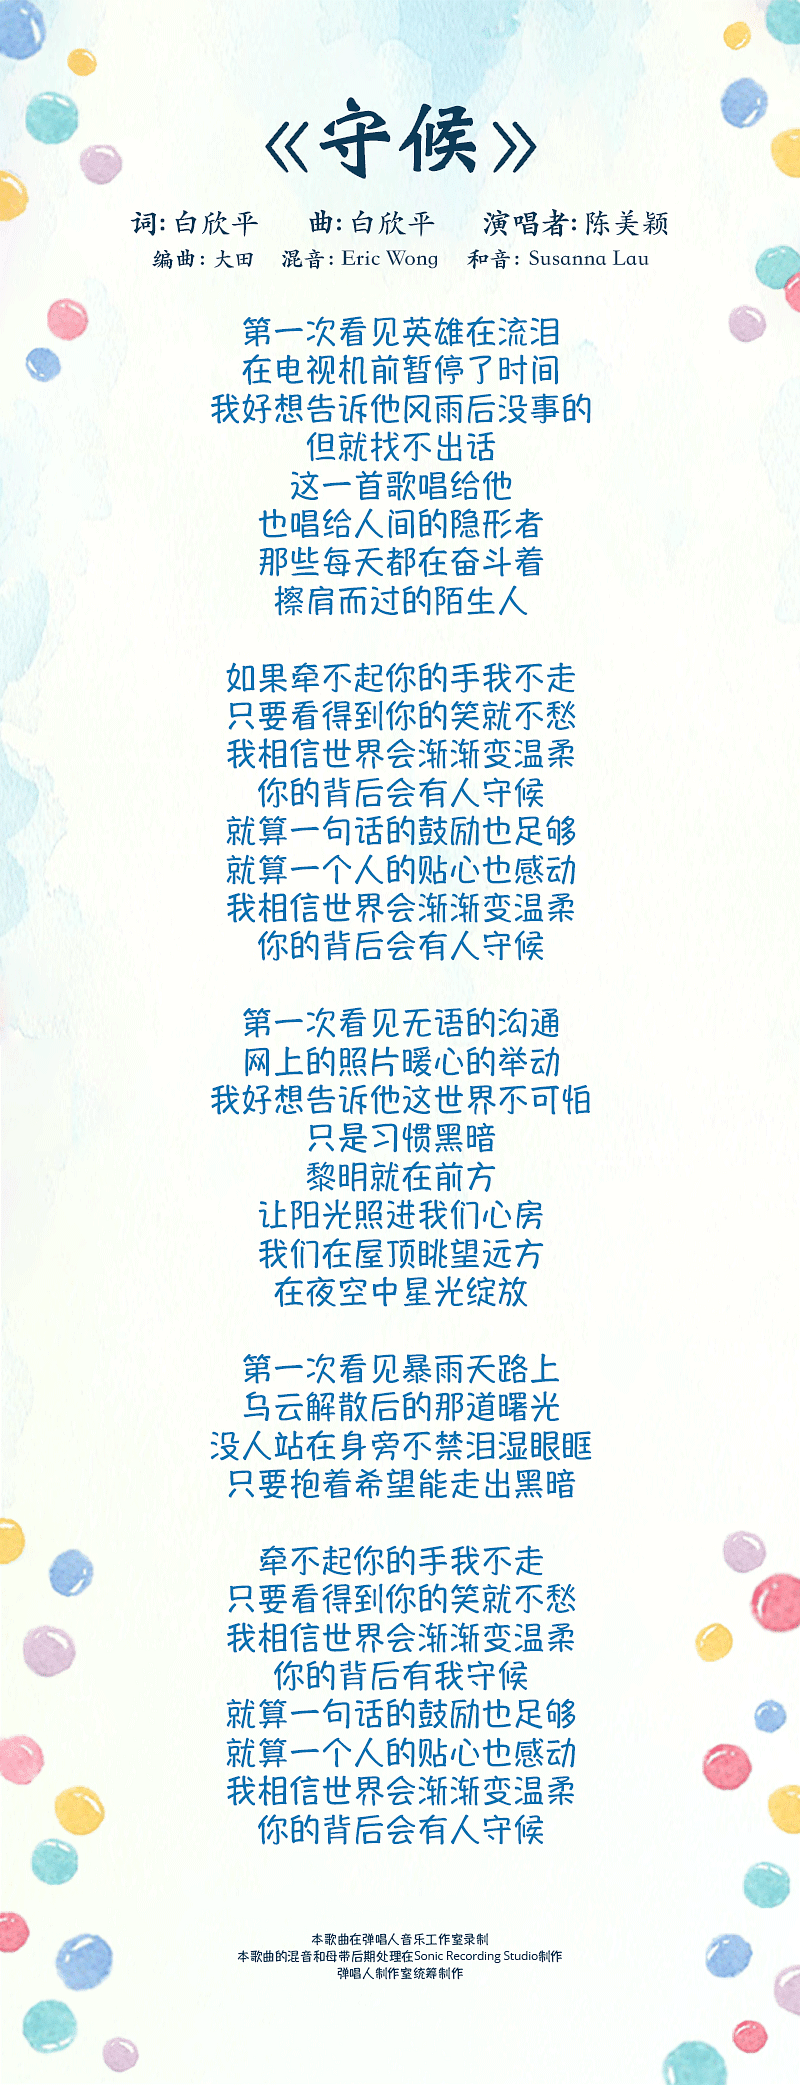 shou-hou-lyrics-mobile2.png